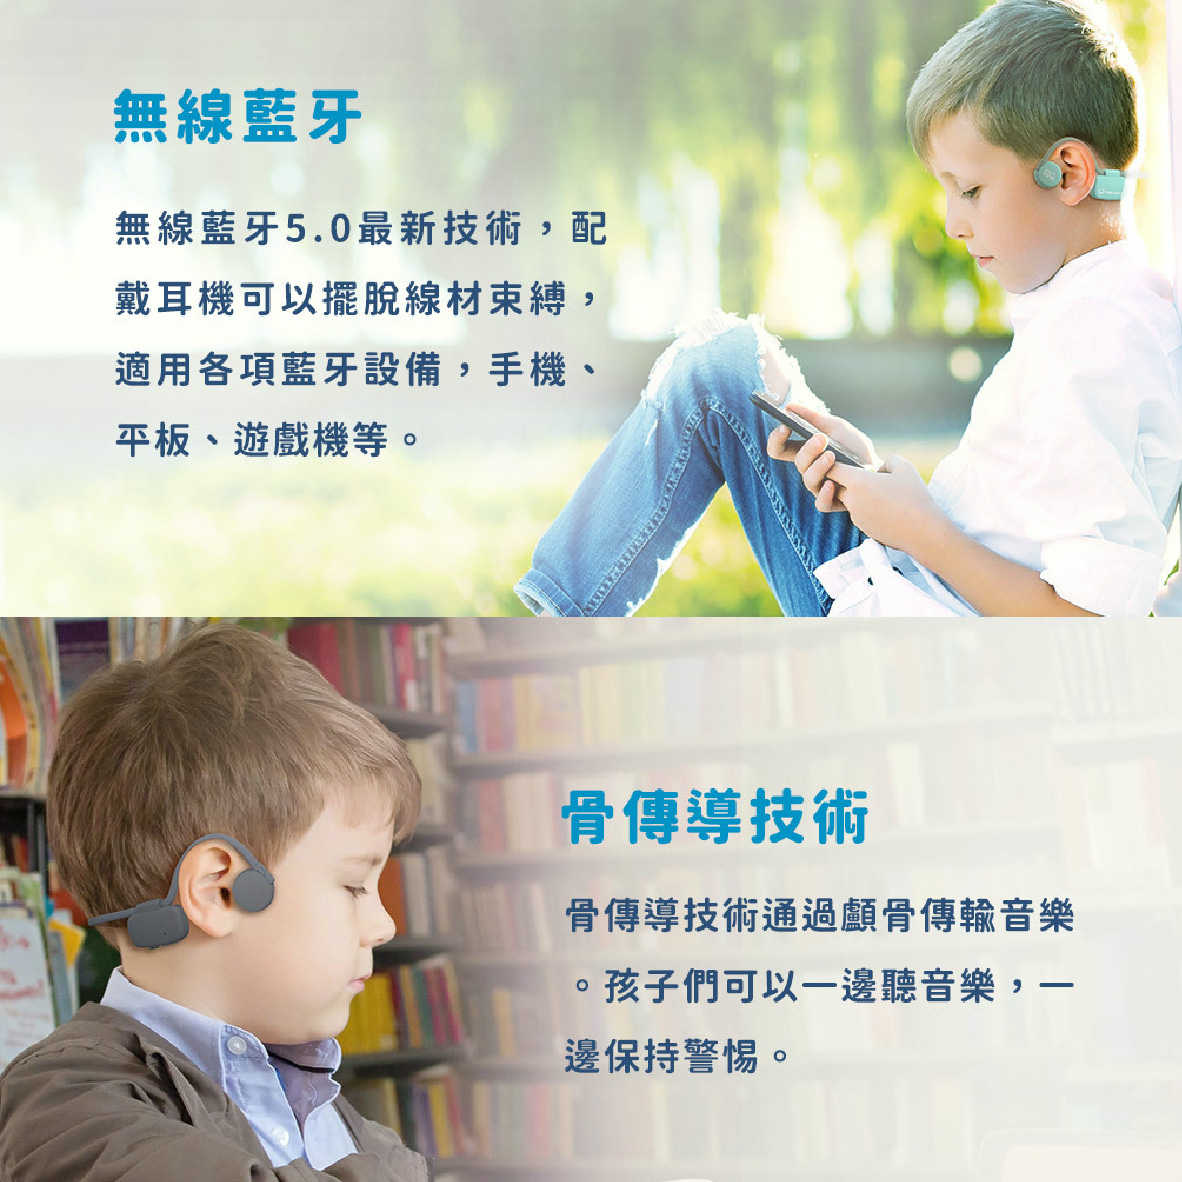 myFirst 骨傳導 兒童耳機 藍牙無線 綠色 IPX6 麥克風 安全音量  | My Ear 耳機專門店